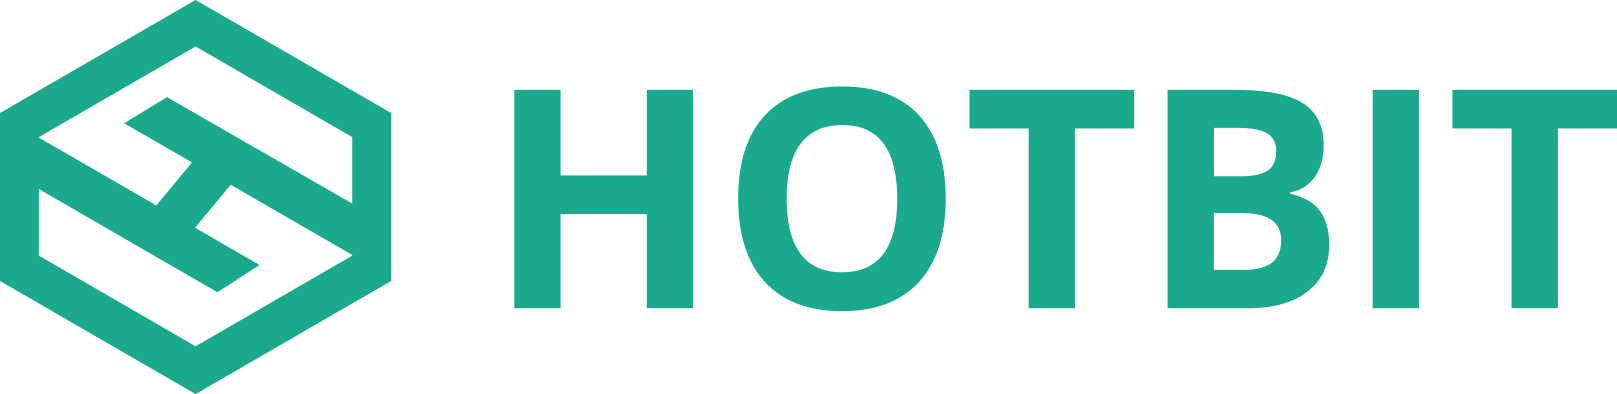 Hotbit-logo